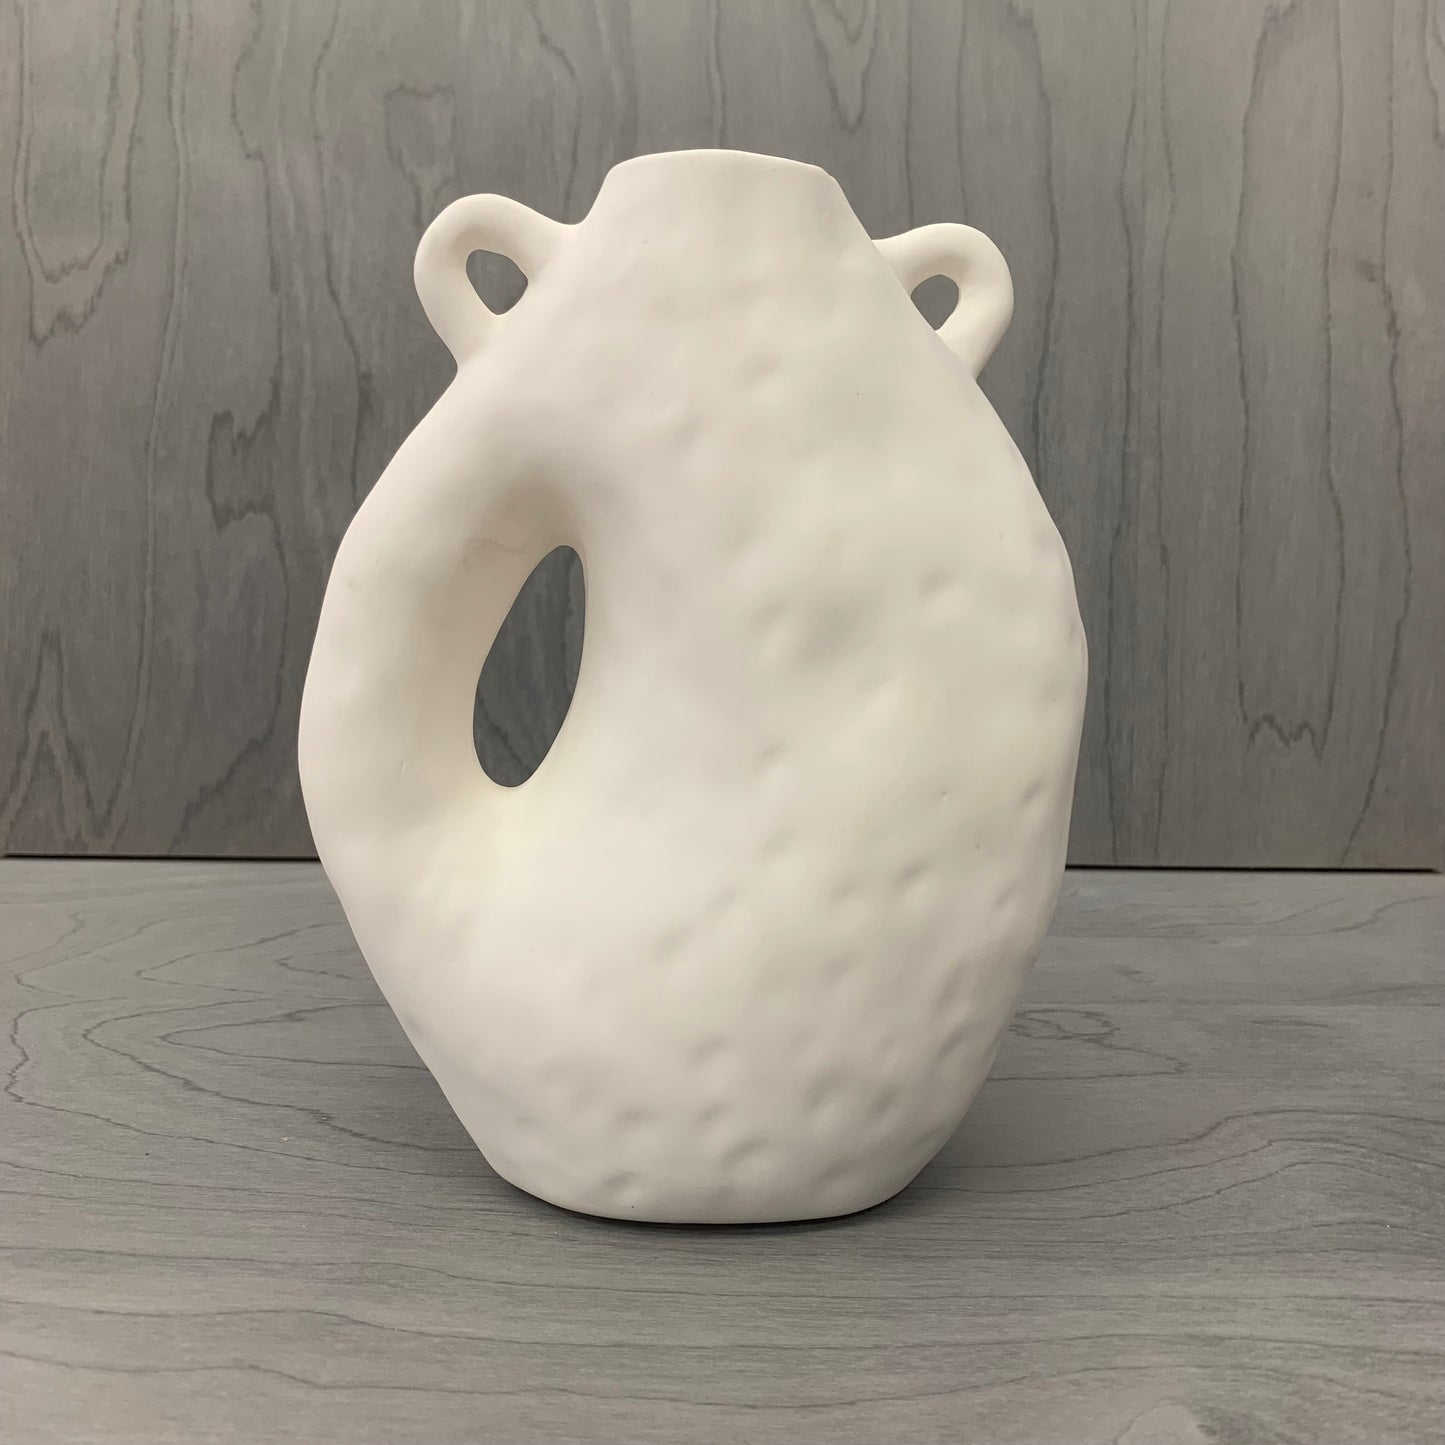 Organic White Vase